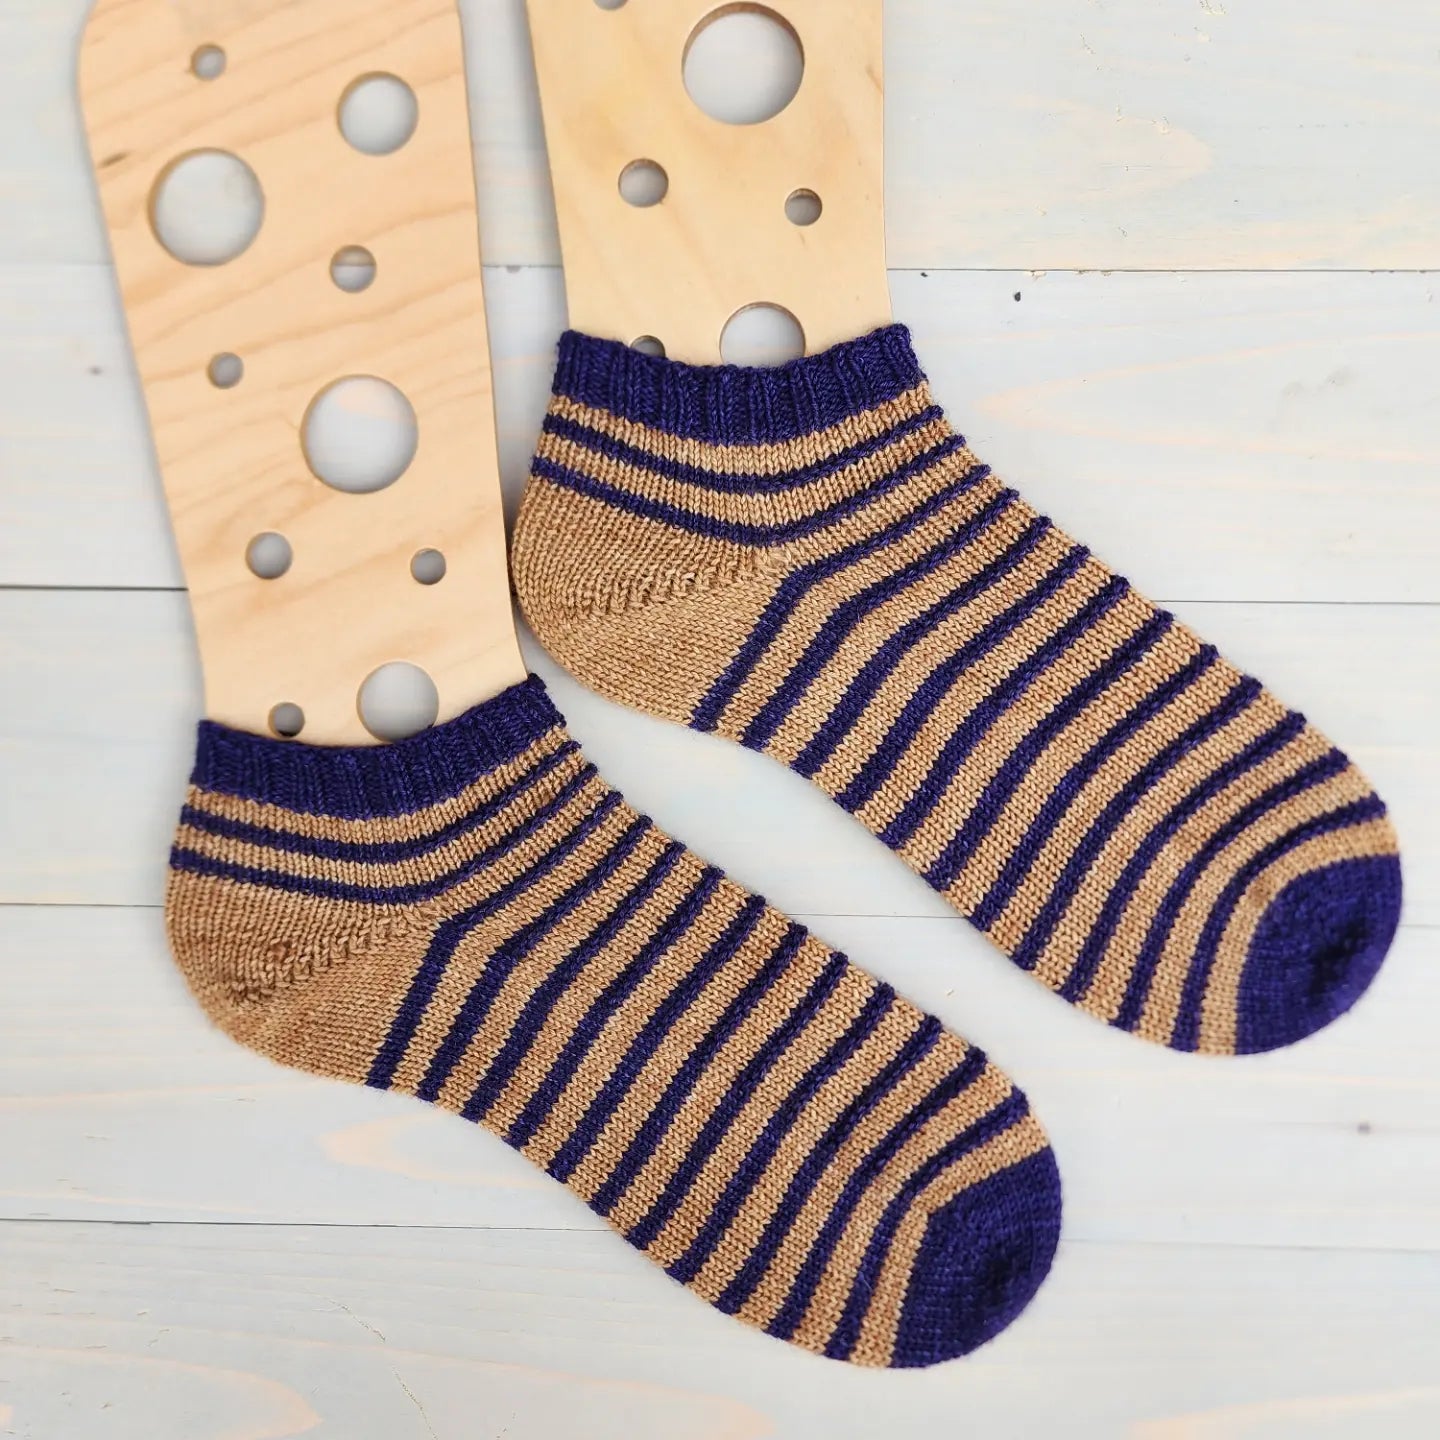 Peanut Butter Jelly Time sock pattern